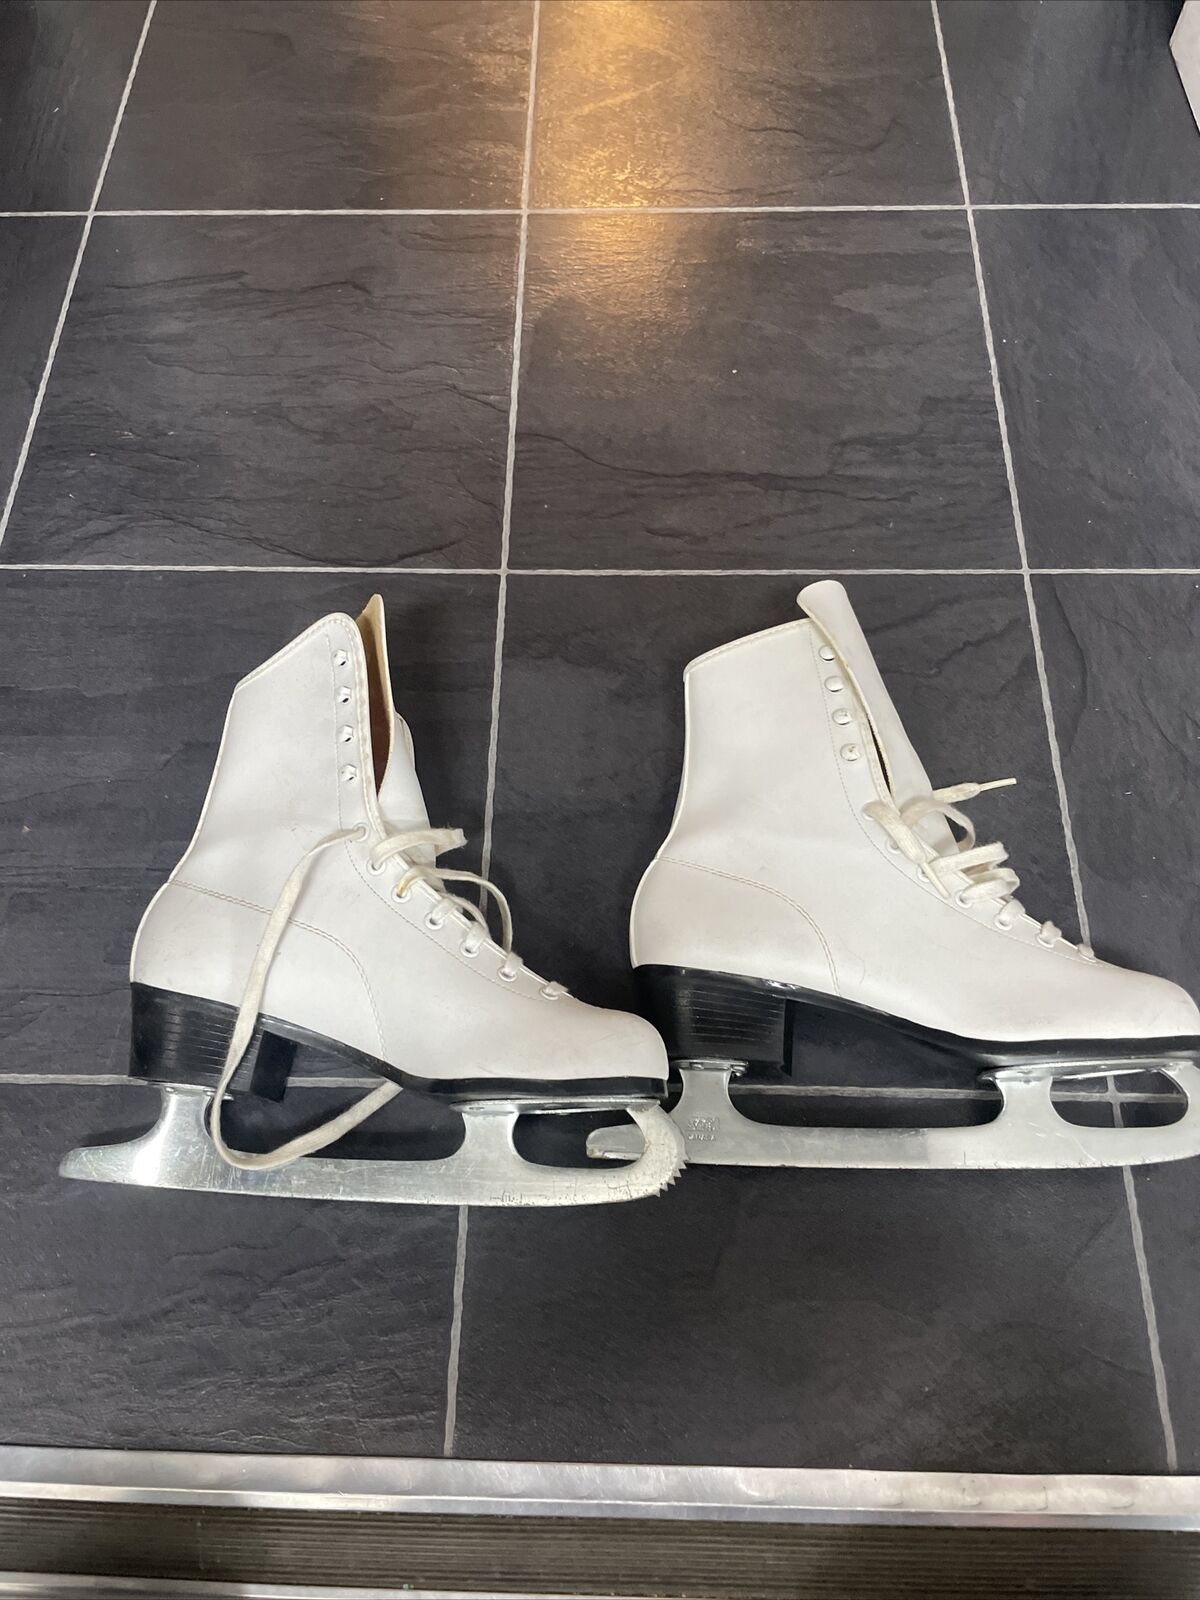 SLM Canada Woman’s Figure Ice Skates White Leather Size 9